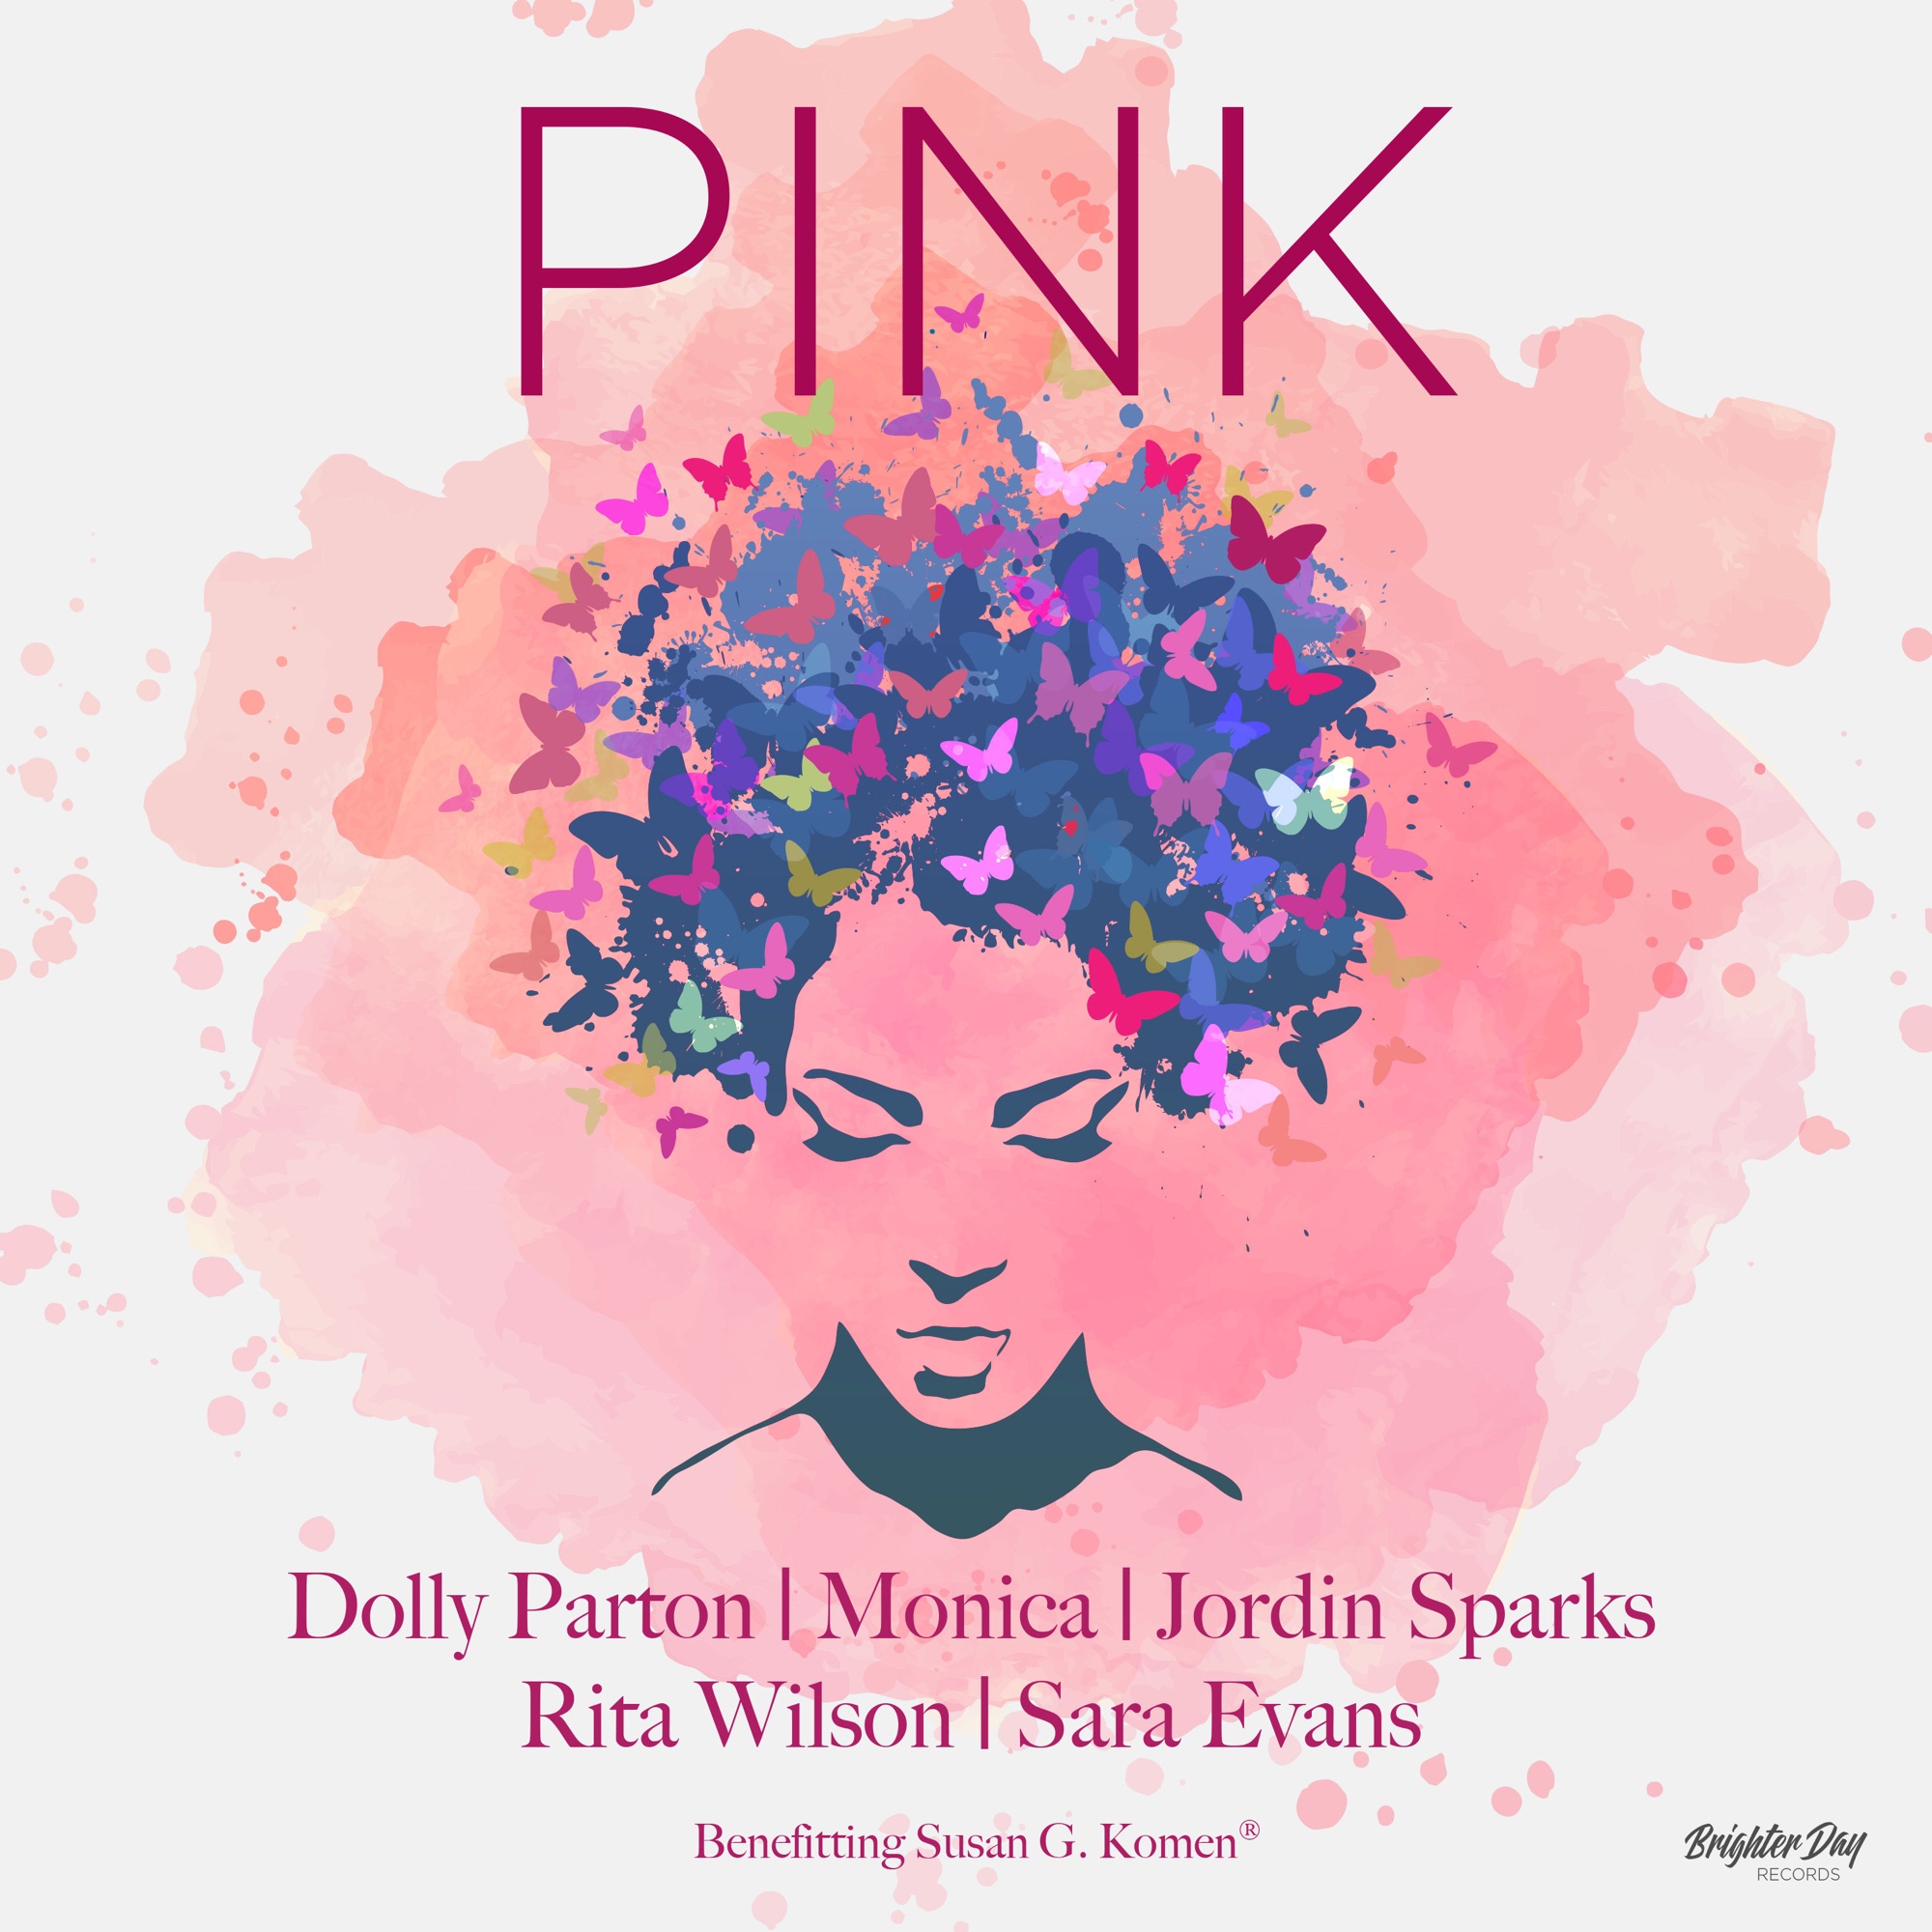 Dolly Parton, Monica, Jordin Sparks, Rita Wilson & Sara Evans - Pink - Single